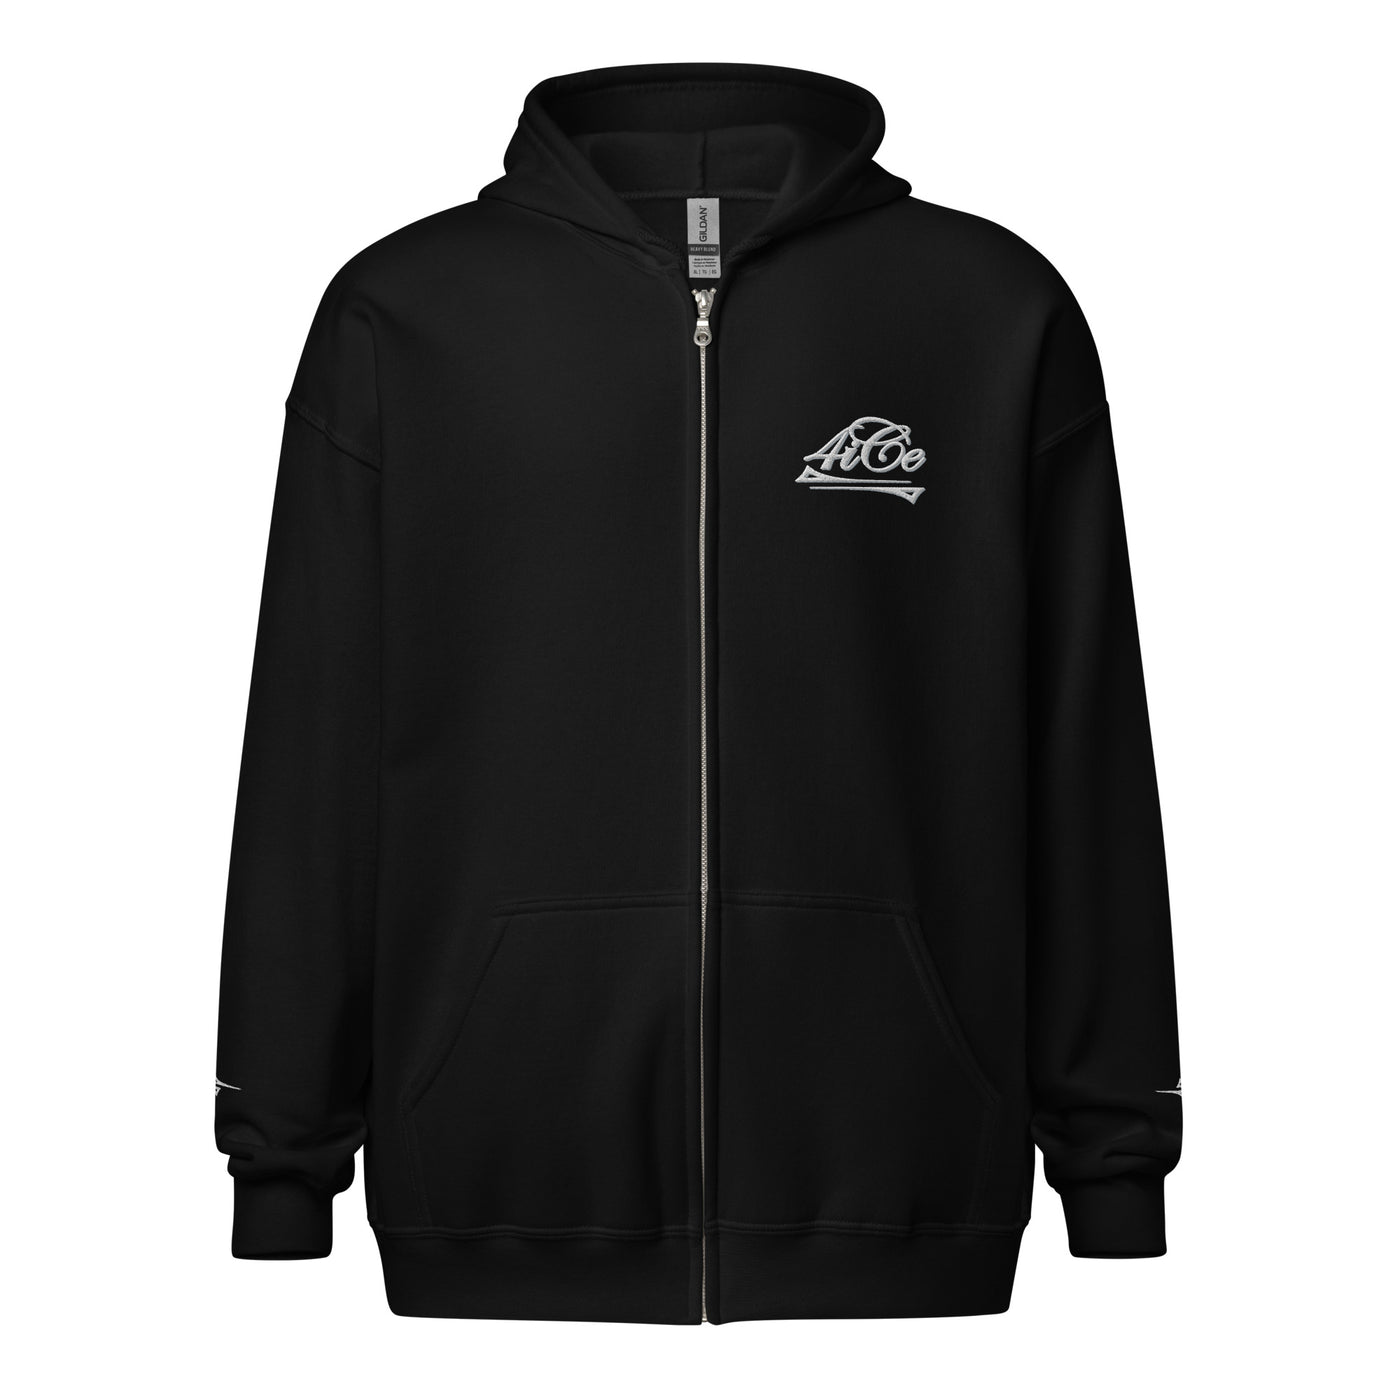  4iCe® Elite Boxing zip hoodie, black, front